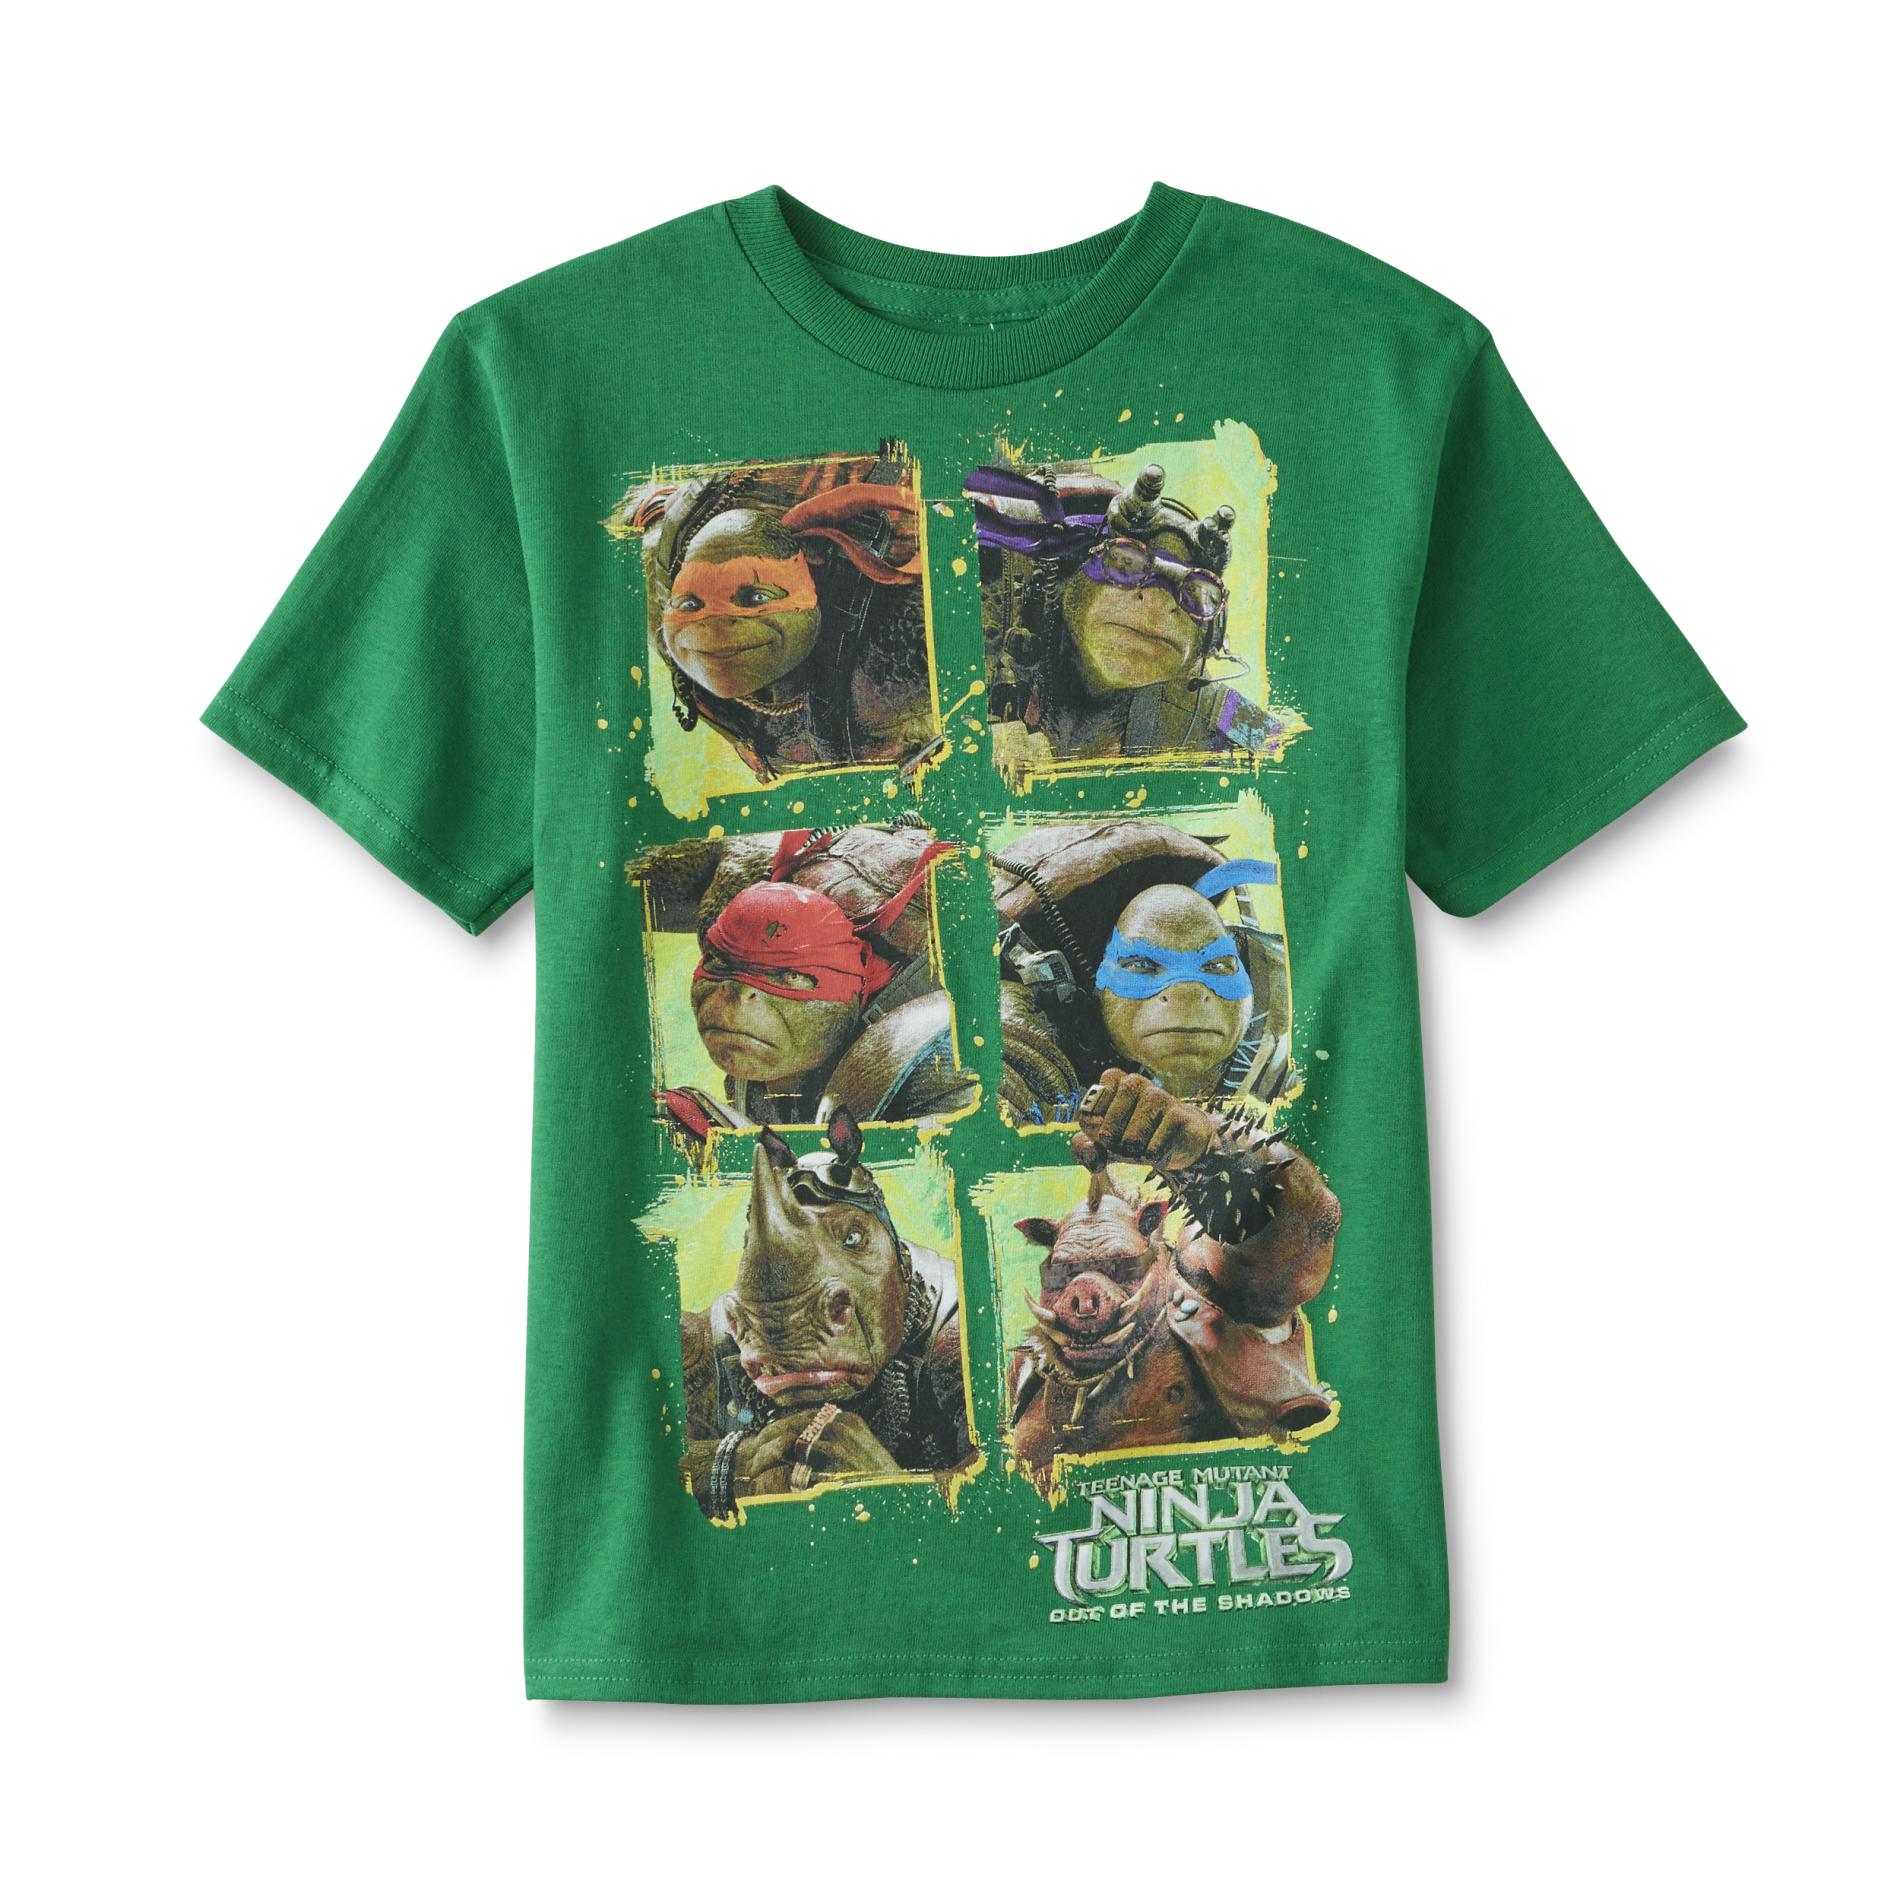 Nickelodeon Teenage Mutant Ninja Turtles: Out of the Shadows Boy's T-Shirt